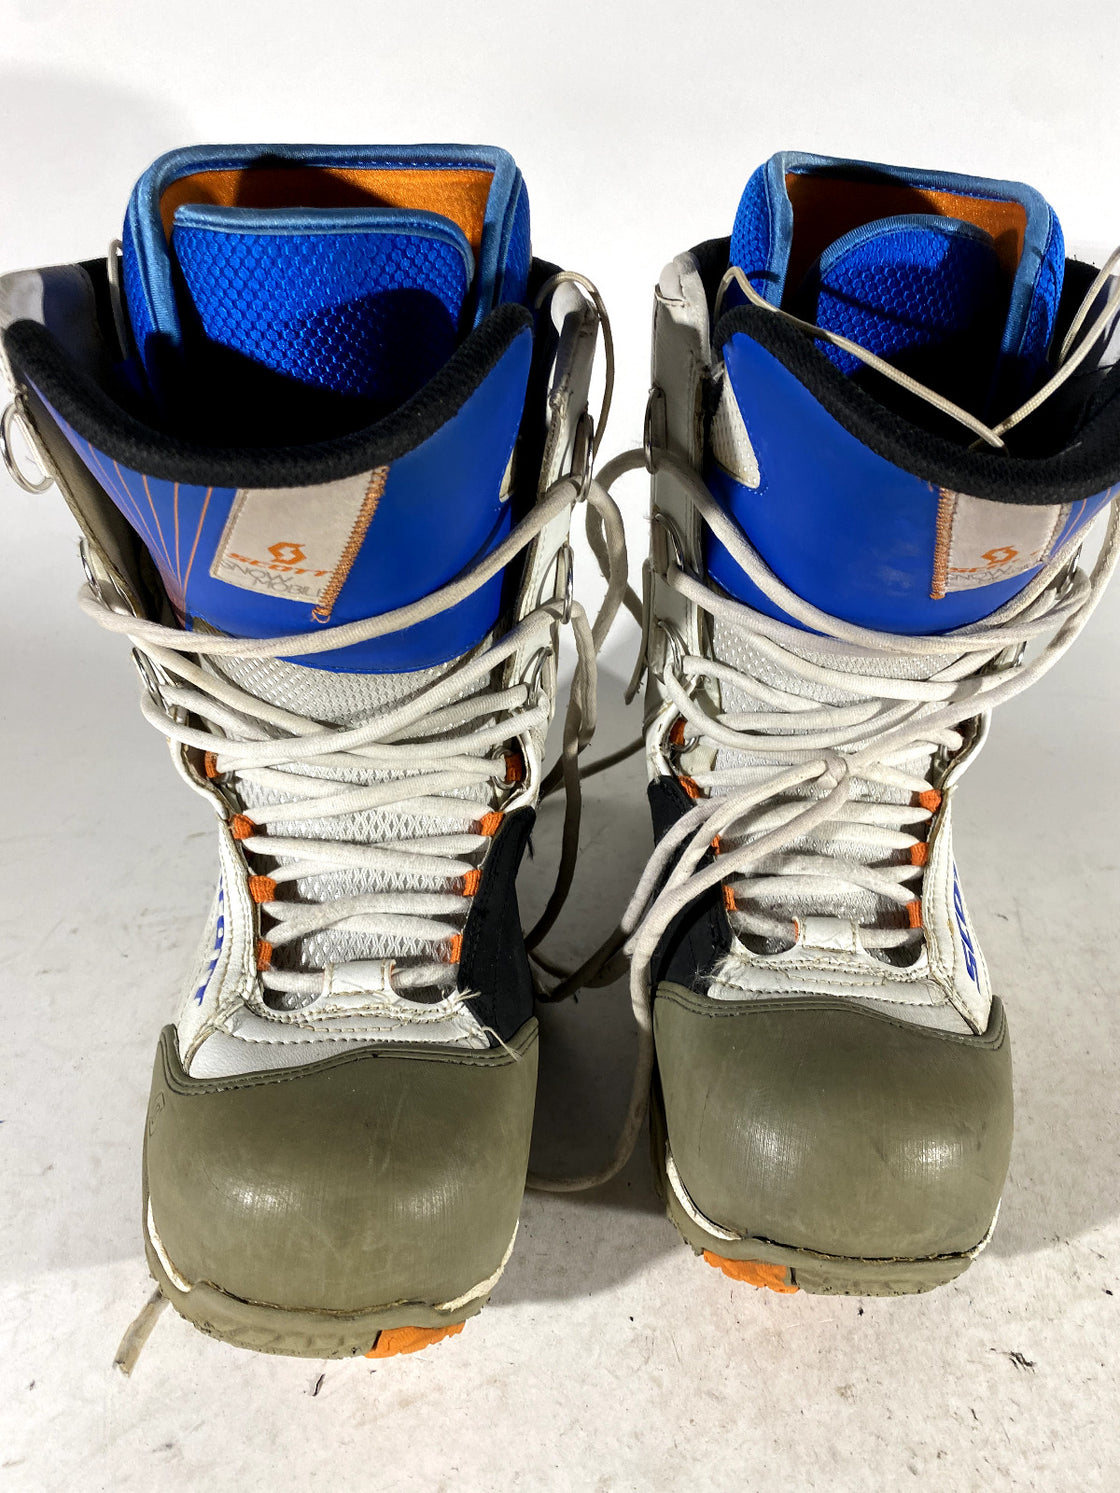 SCOTT Snowboard Boots Size EU41 US8 UK7 Mondo 255 mm